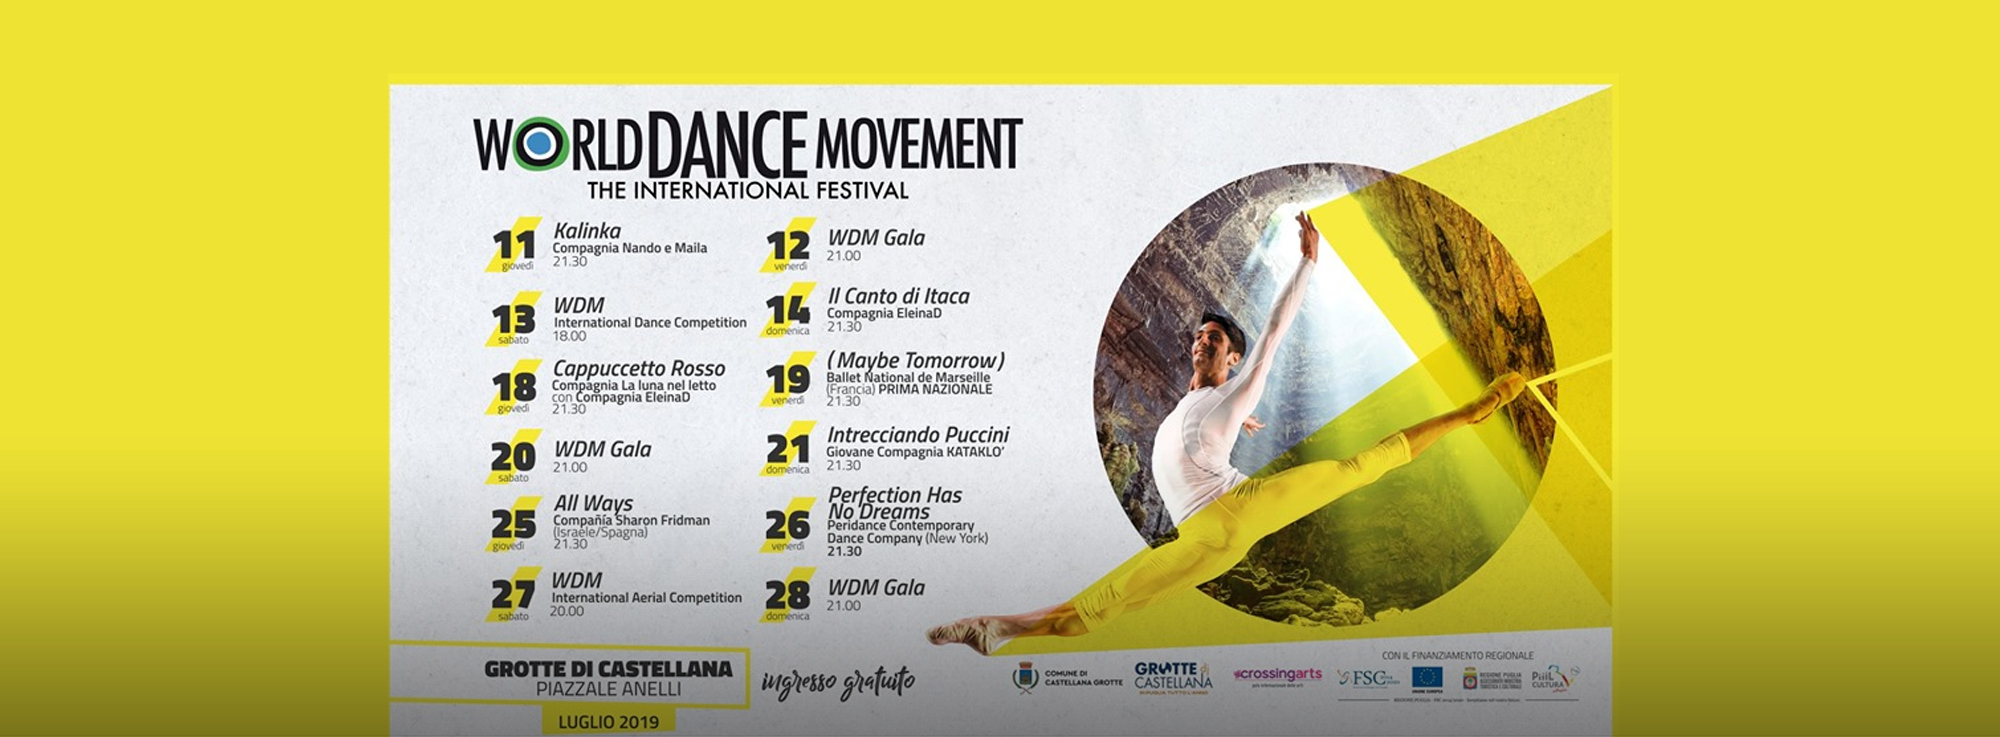 Castellana Grotte: World Dance Movement - The International Festival